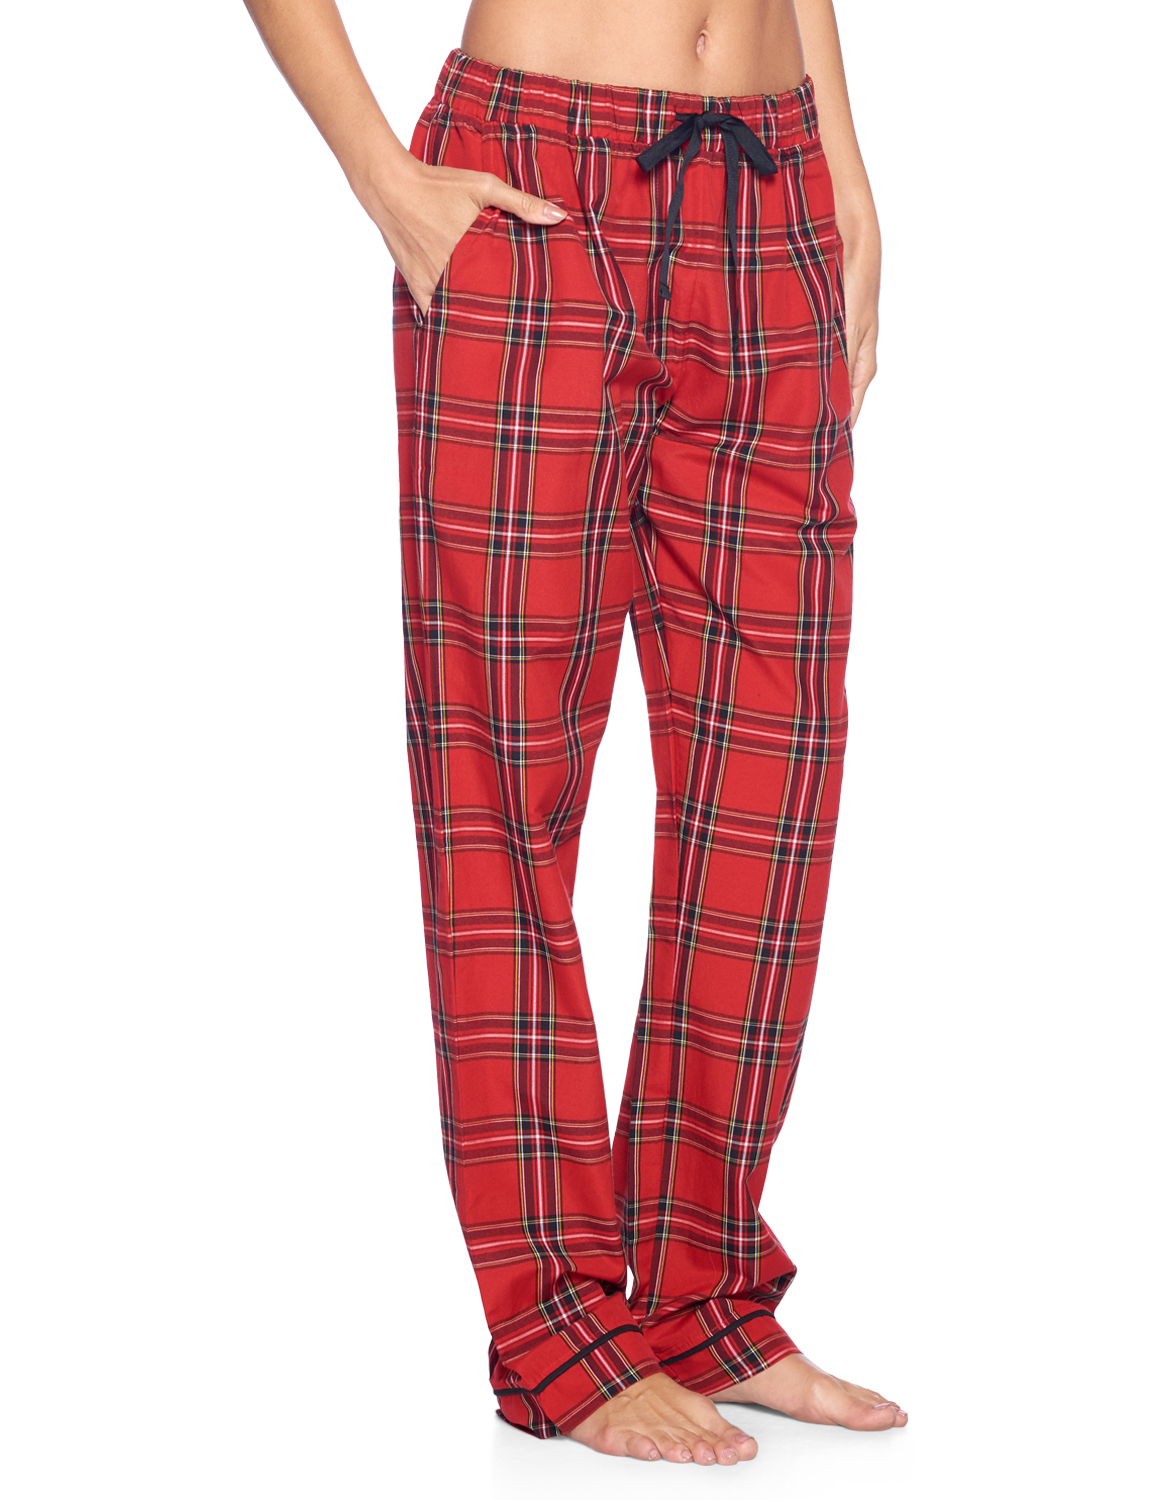 Ashford & Brooks Women's Woven Pajama Sleep Pants - Red/Black Stewart ...